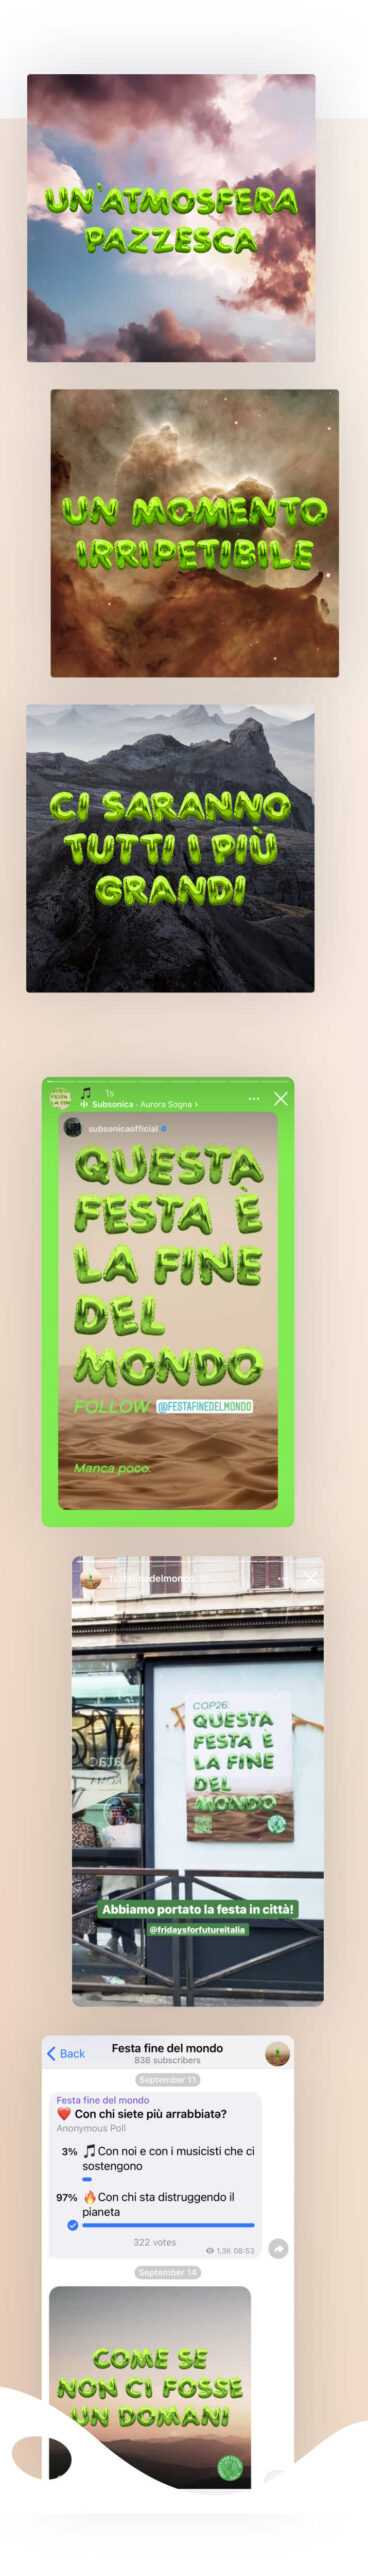 mobile_teaser Fridays for future italia